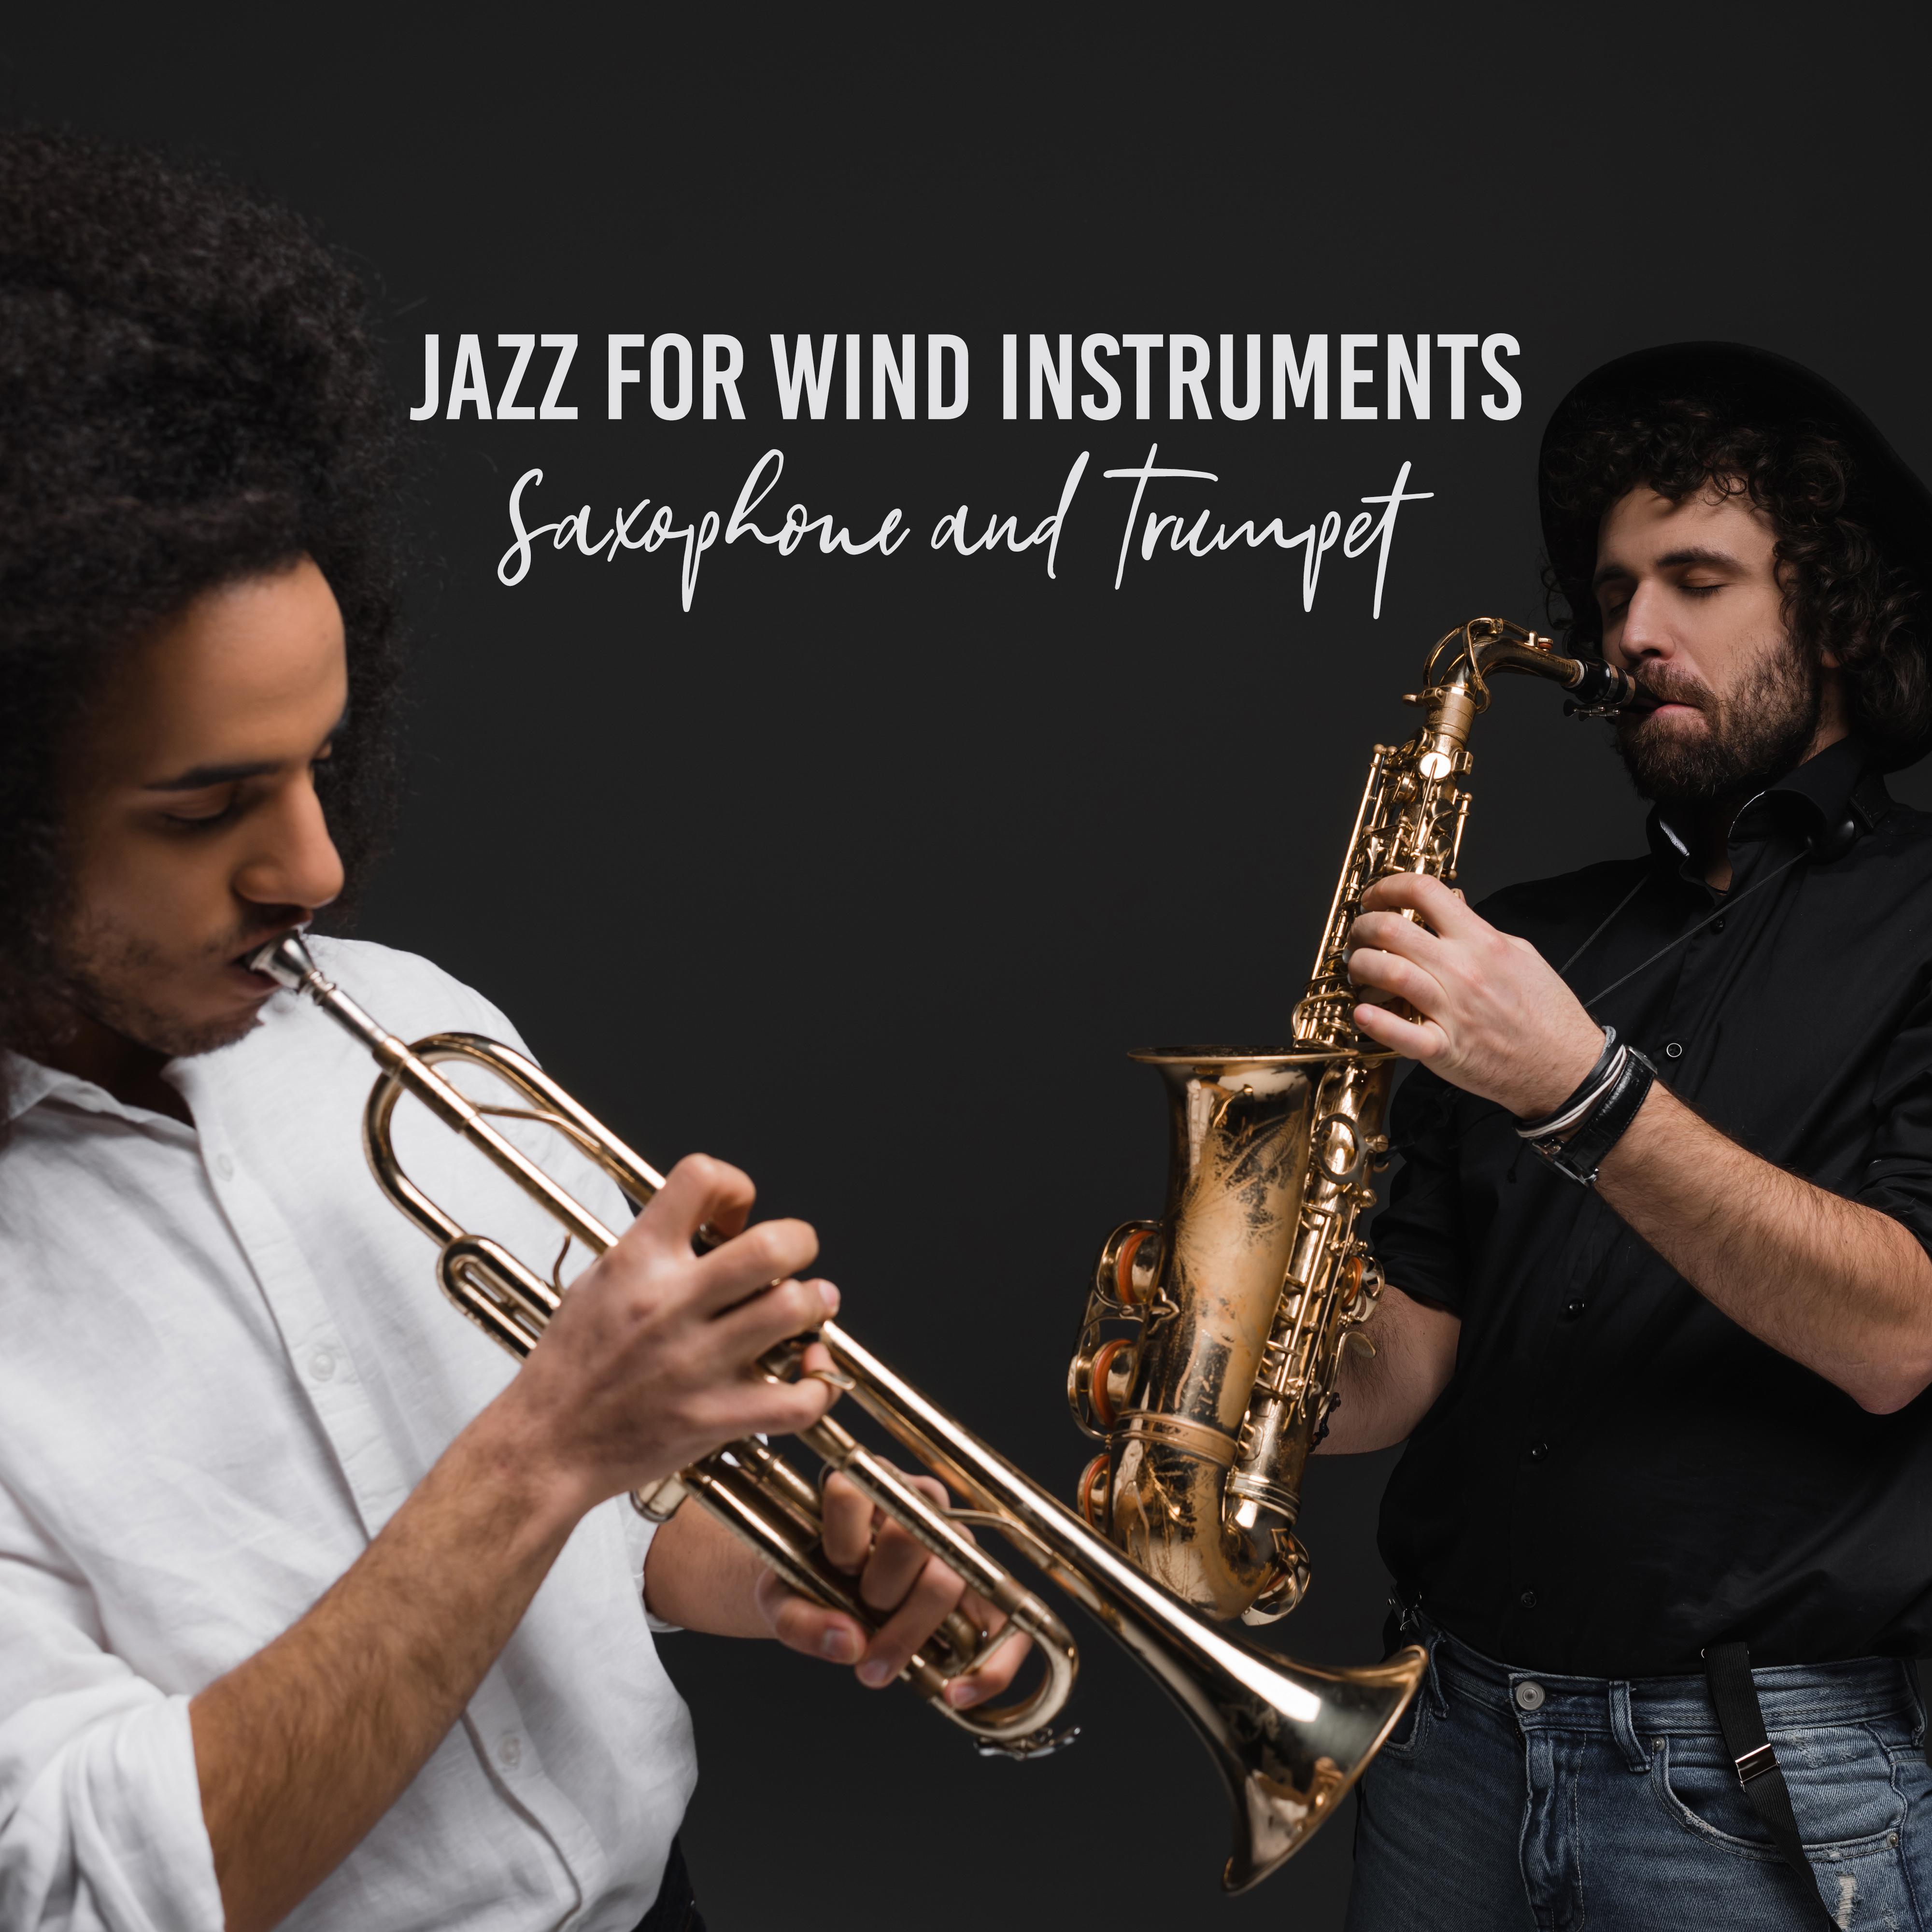 Jazz for Wind Instruments - Saxophone and Trumpet (Instrumental Jazz Music 2019)